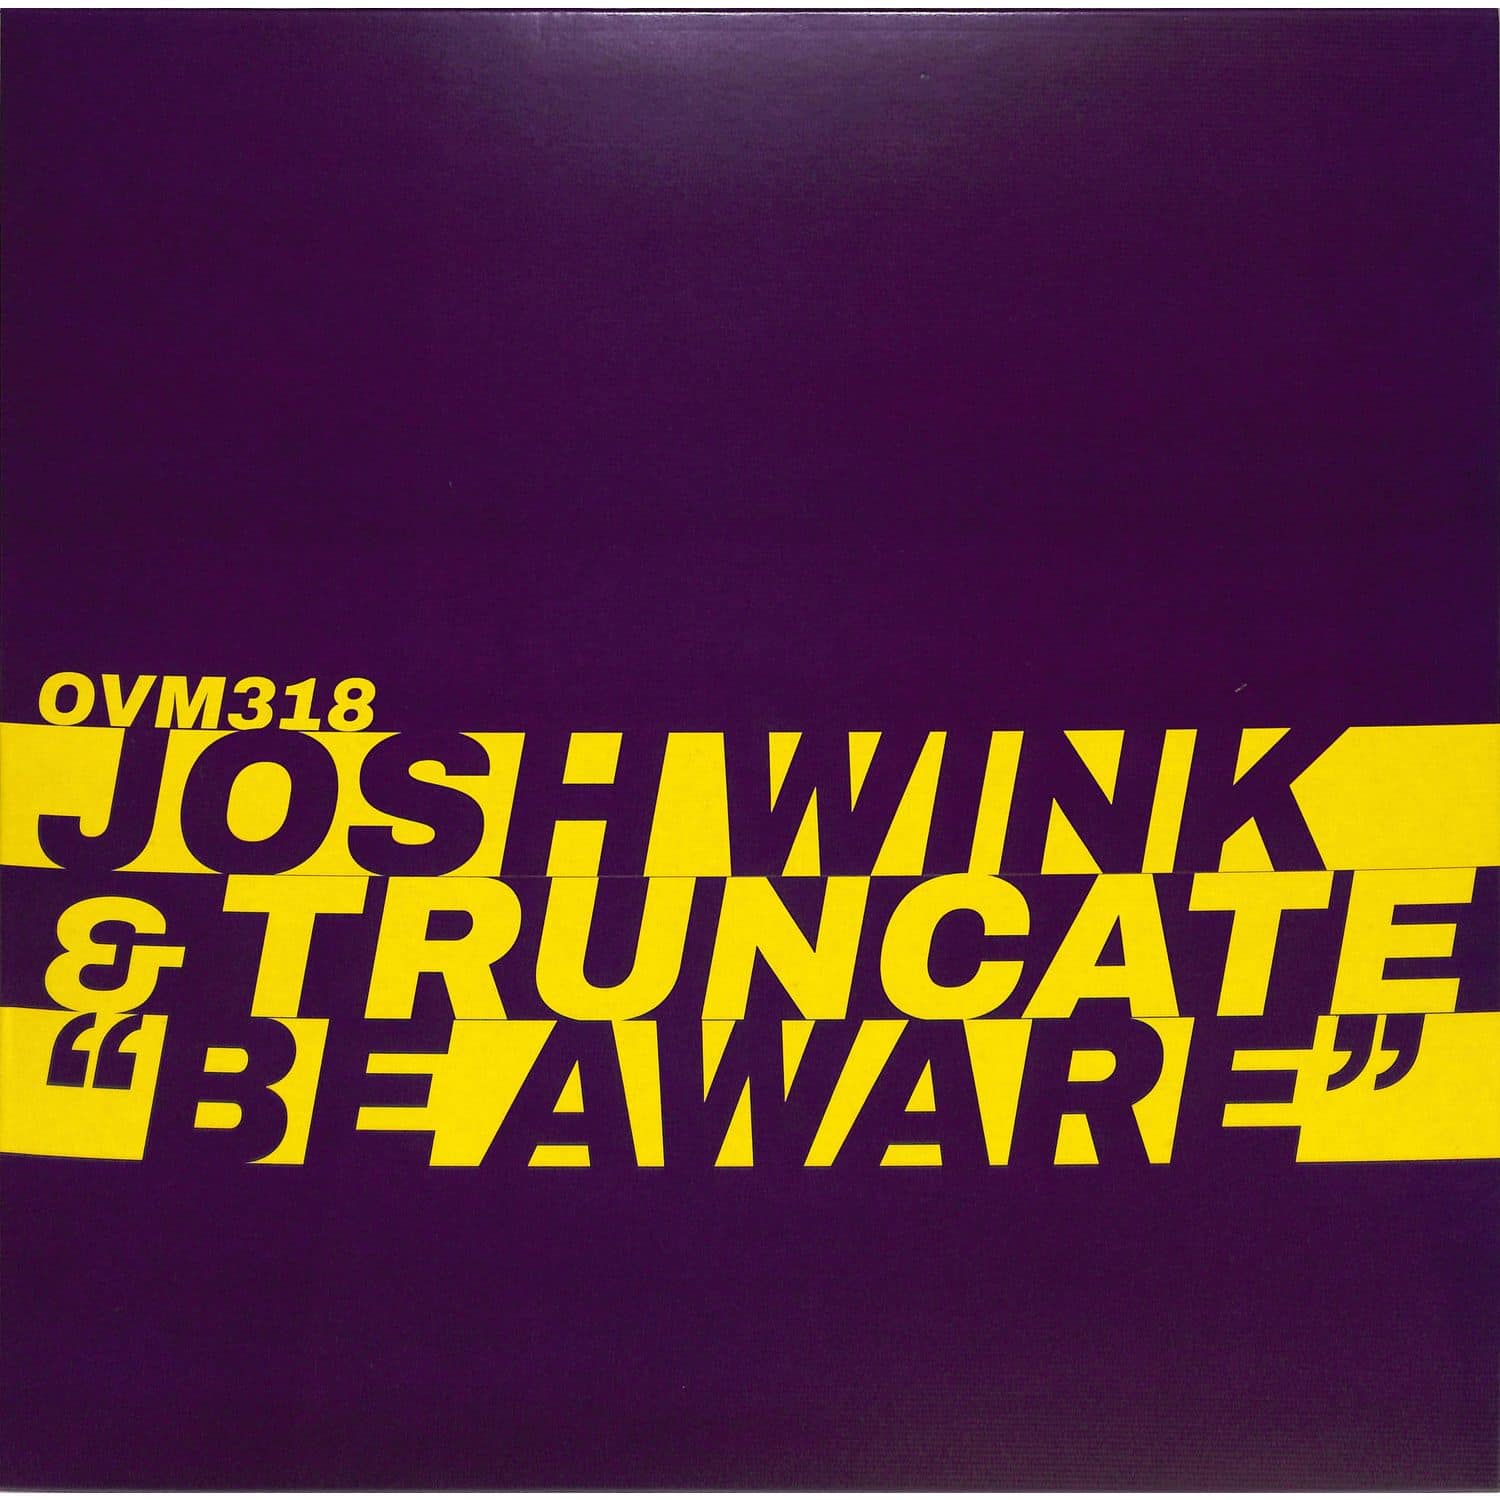 Josh Wink and Truncate - BE AWARE